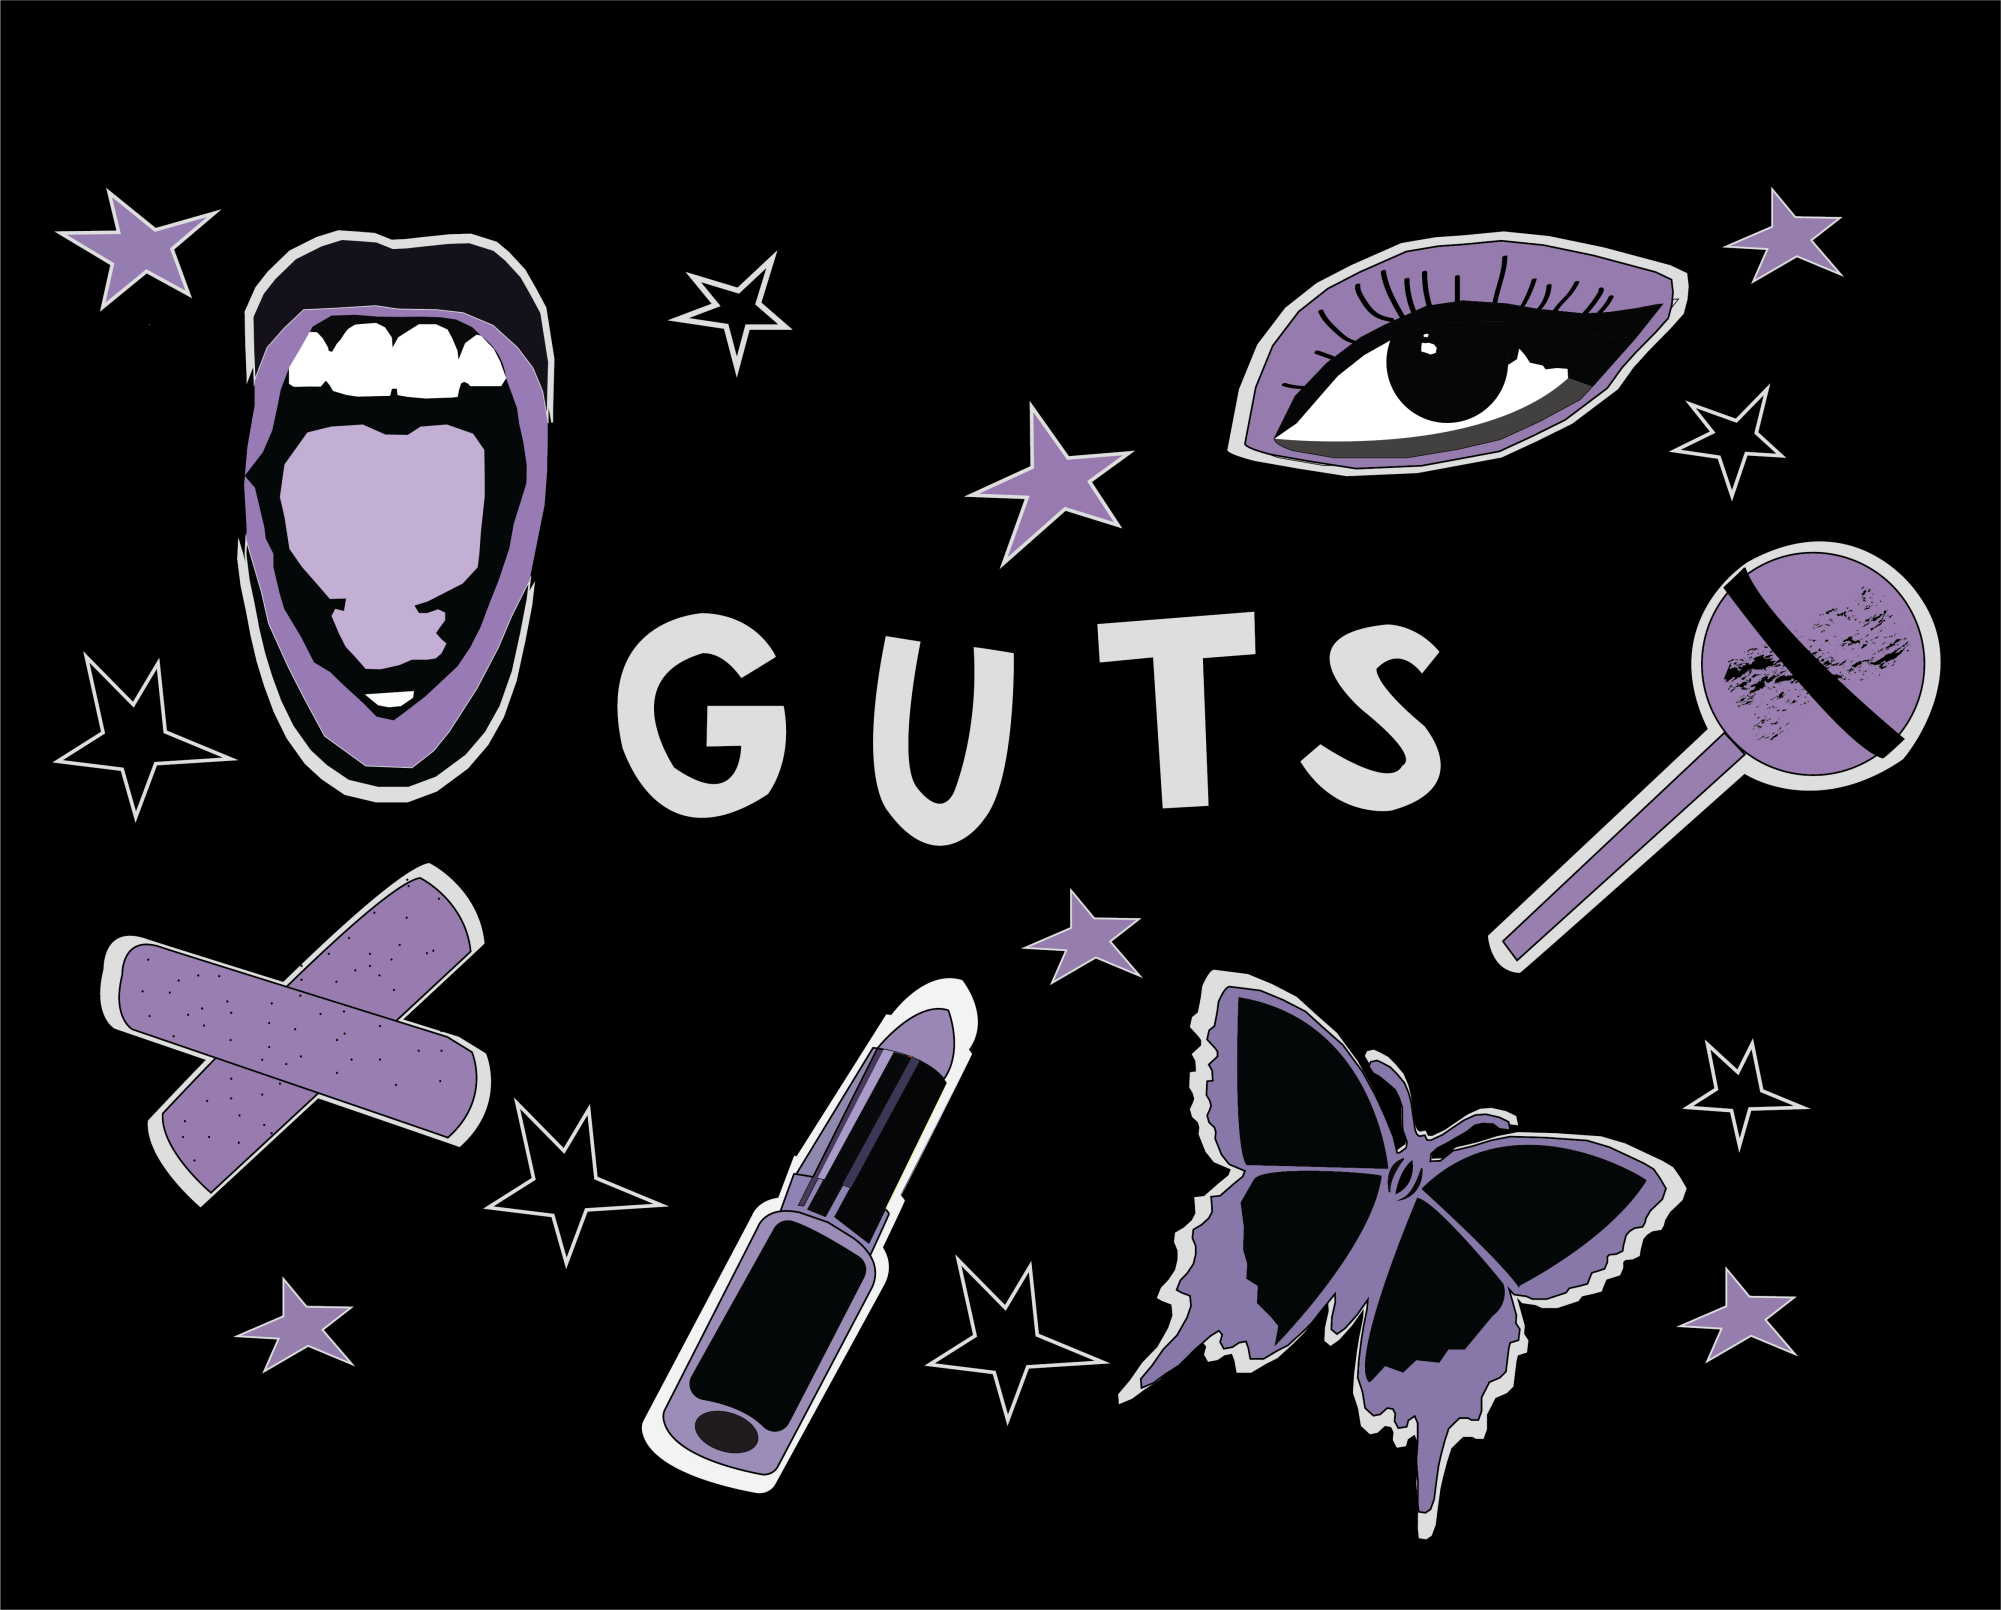 A digital illustration of stickers promoting Olivia Rodrigos newest album, GUTS.